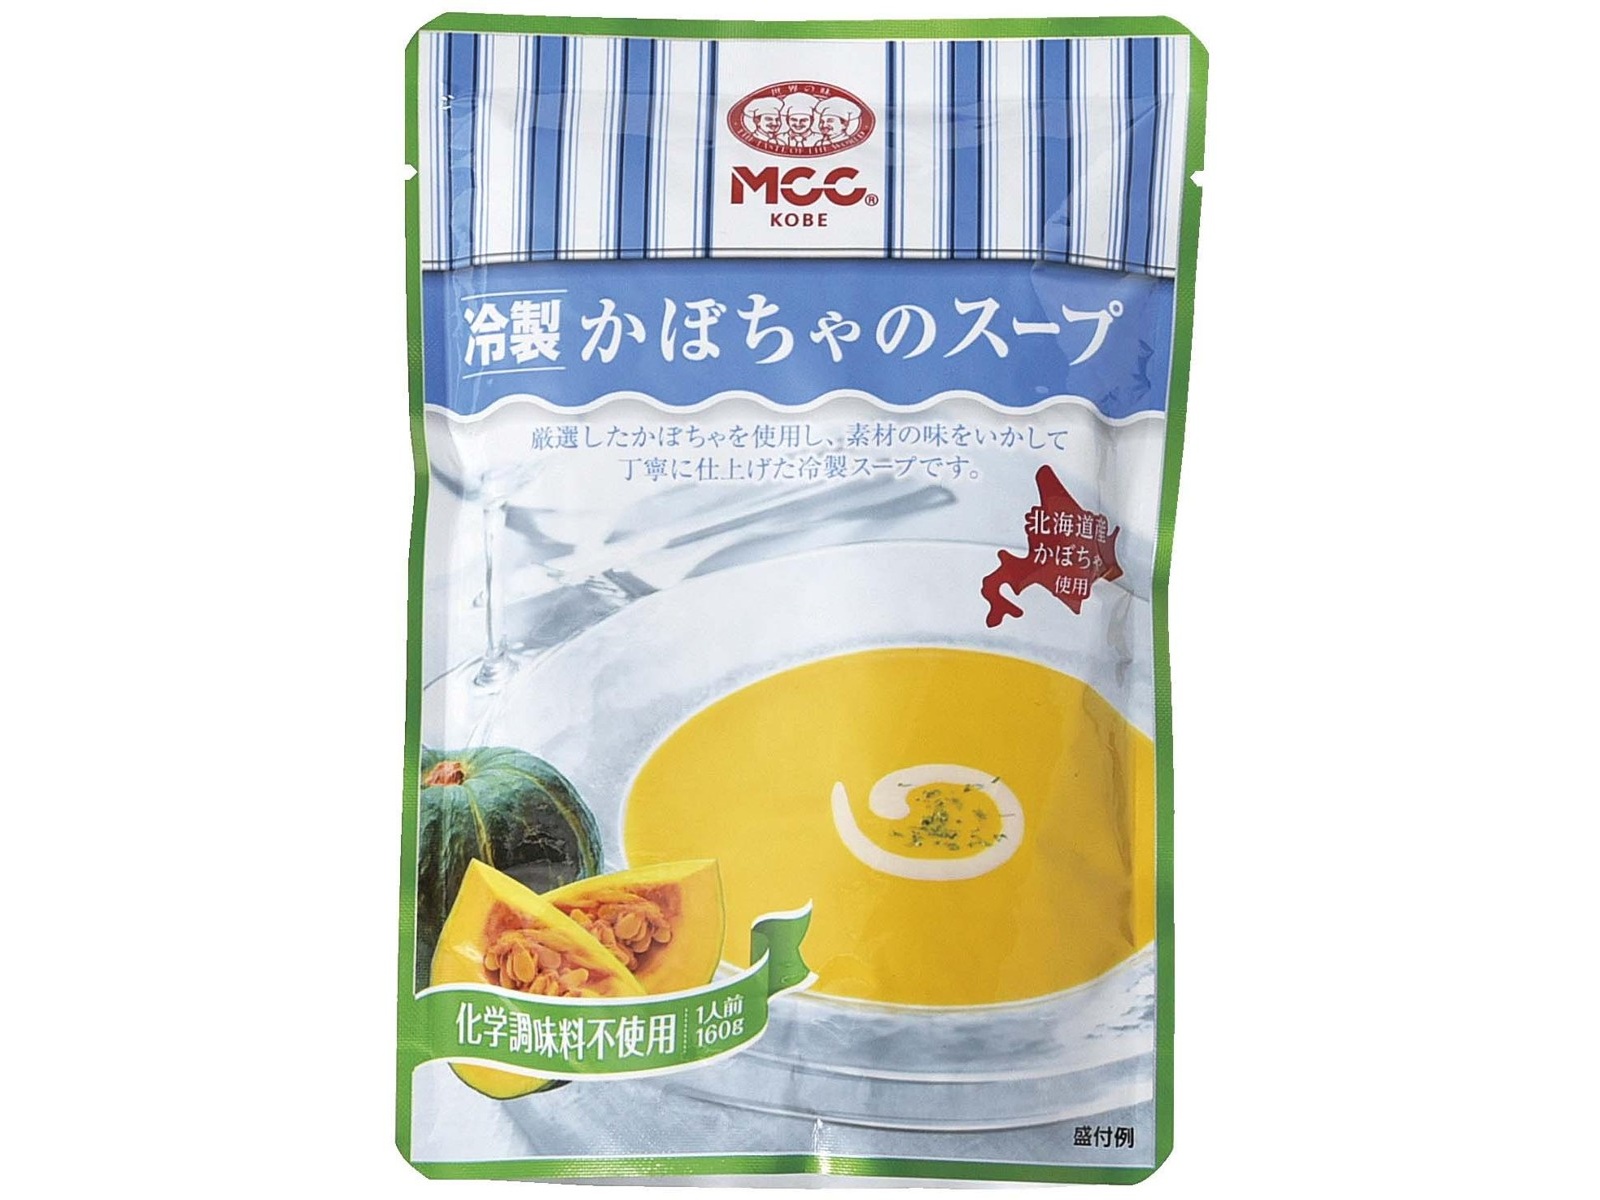 MCC 冷製野菜のスープセット 160g×3食入| コープこうべネット